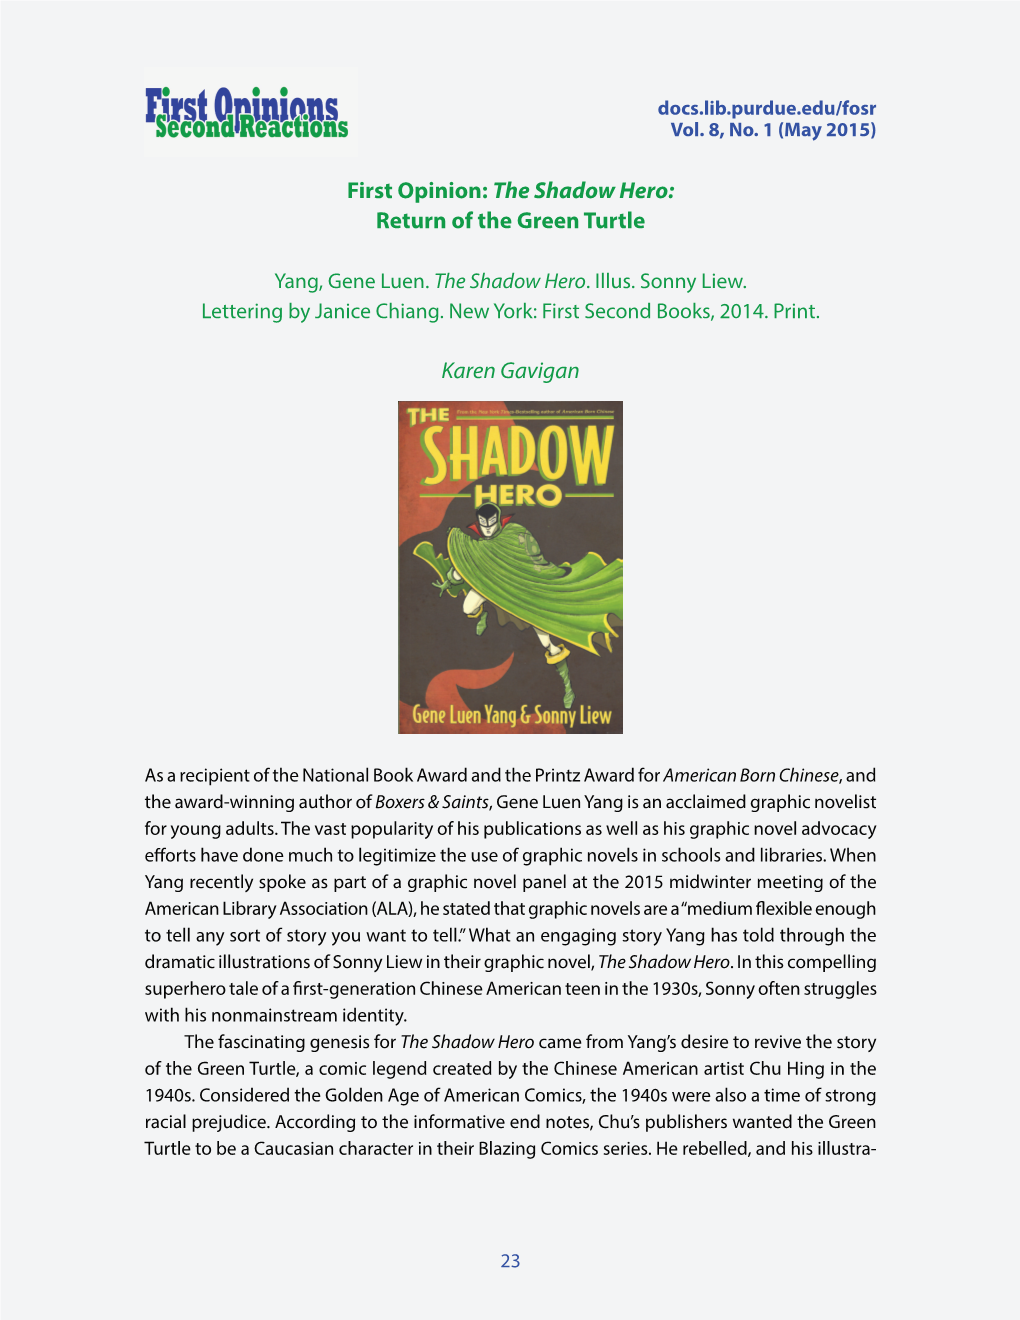 The Shadow Hero: Return of the Green Turtle